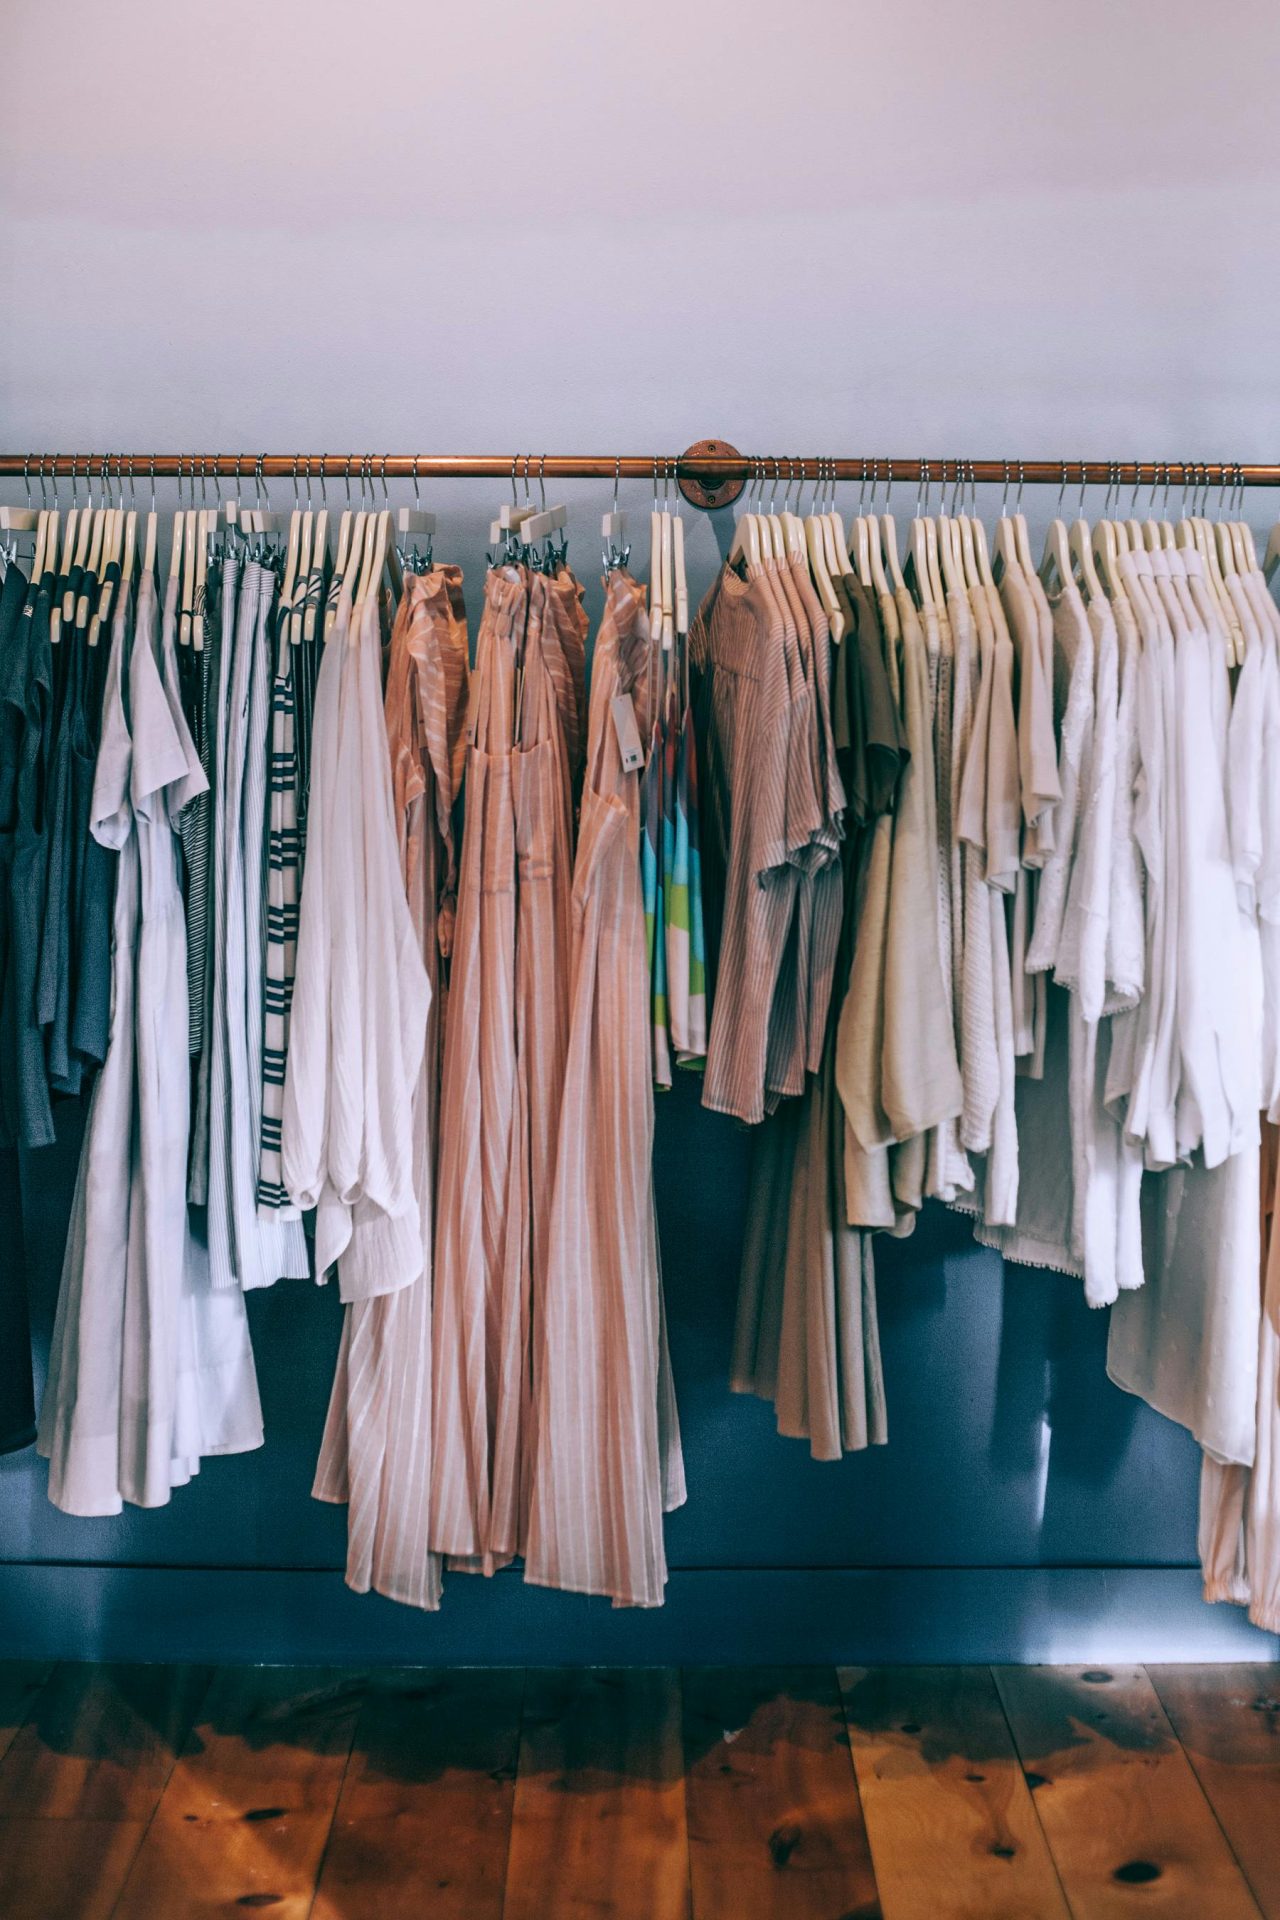 Benefits of Effective Clothing Storage